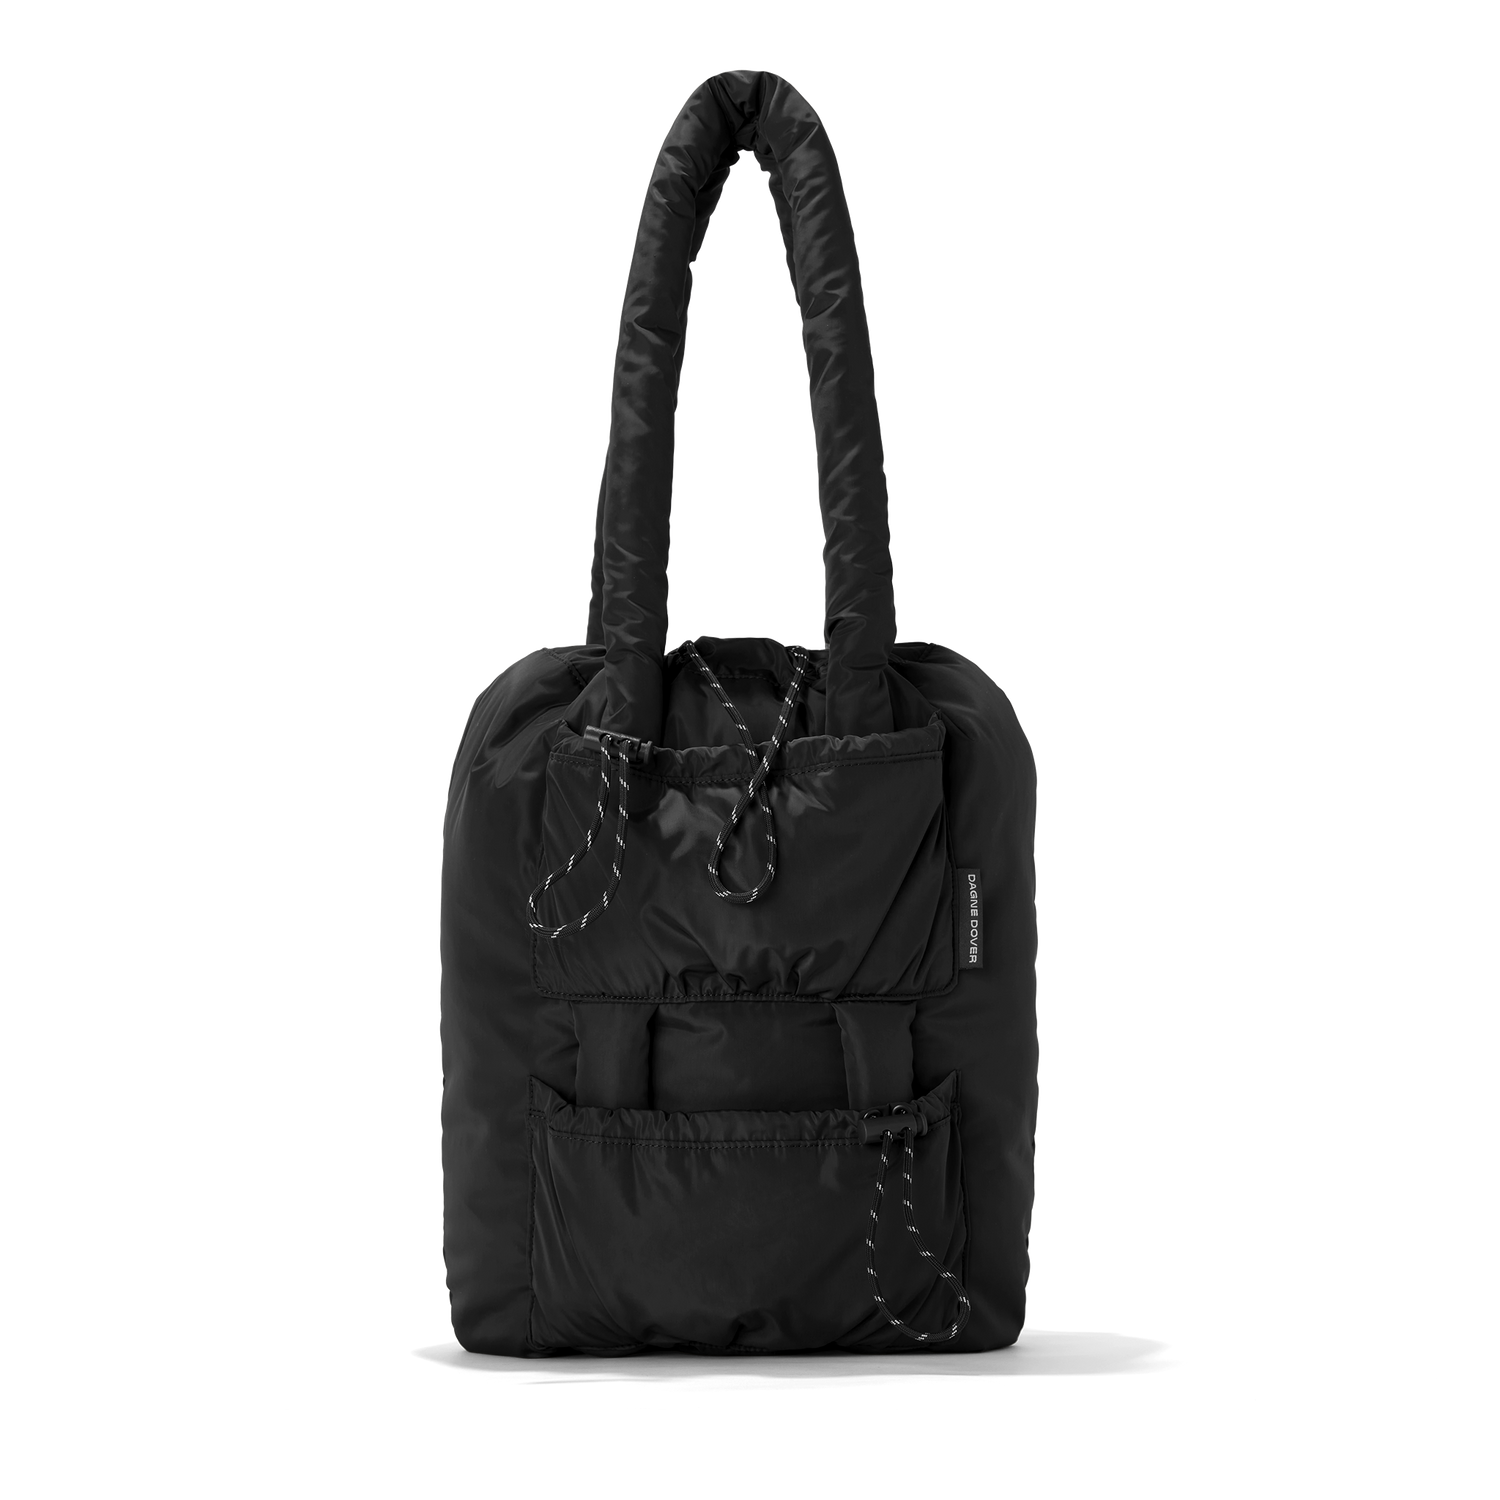 Black Small Re-nylon Padded Tote Bag